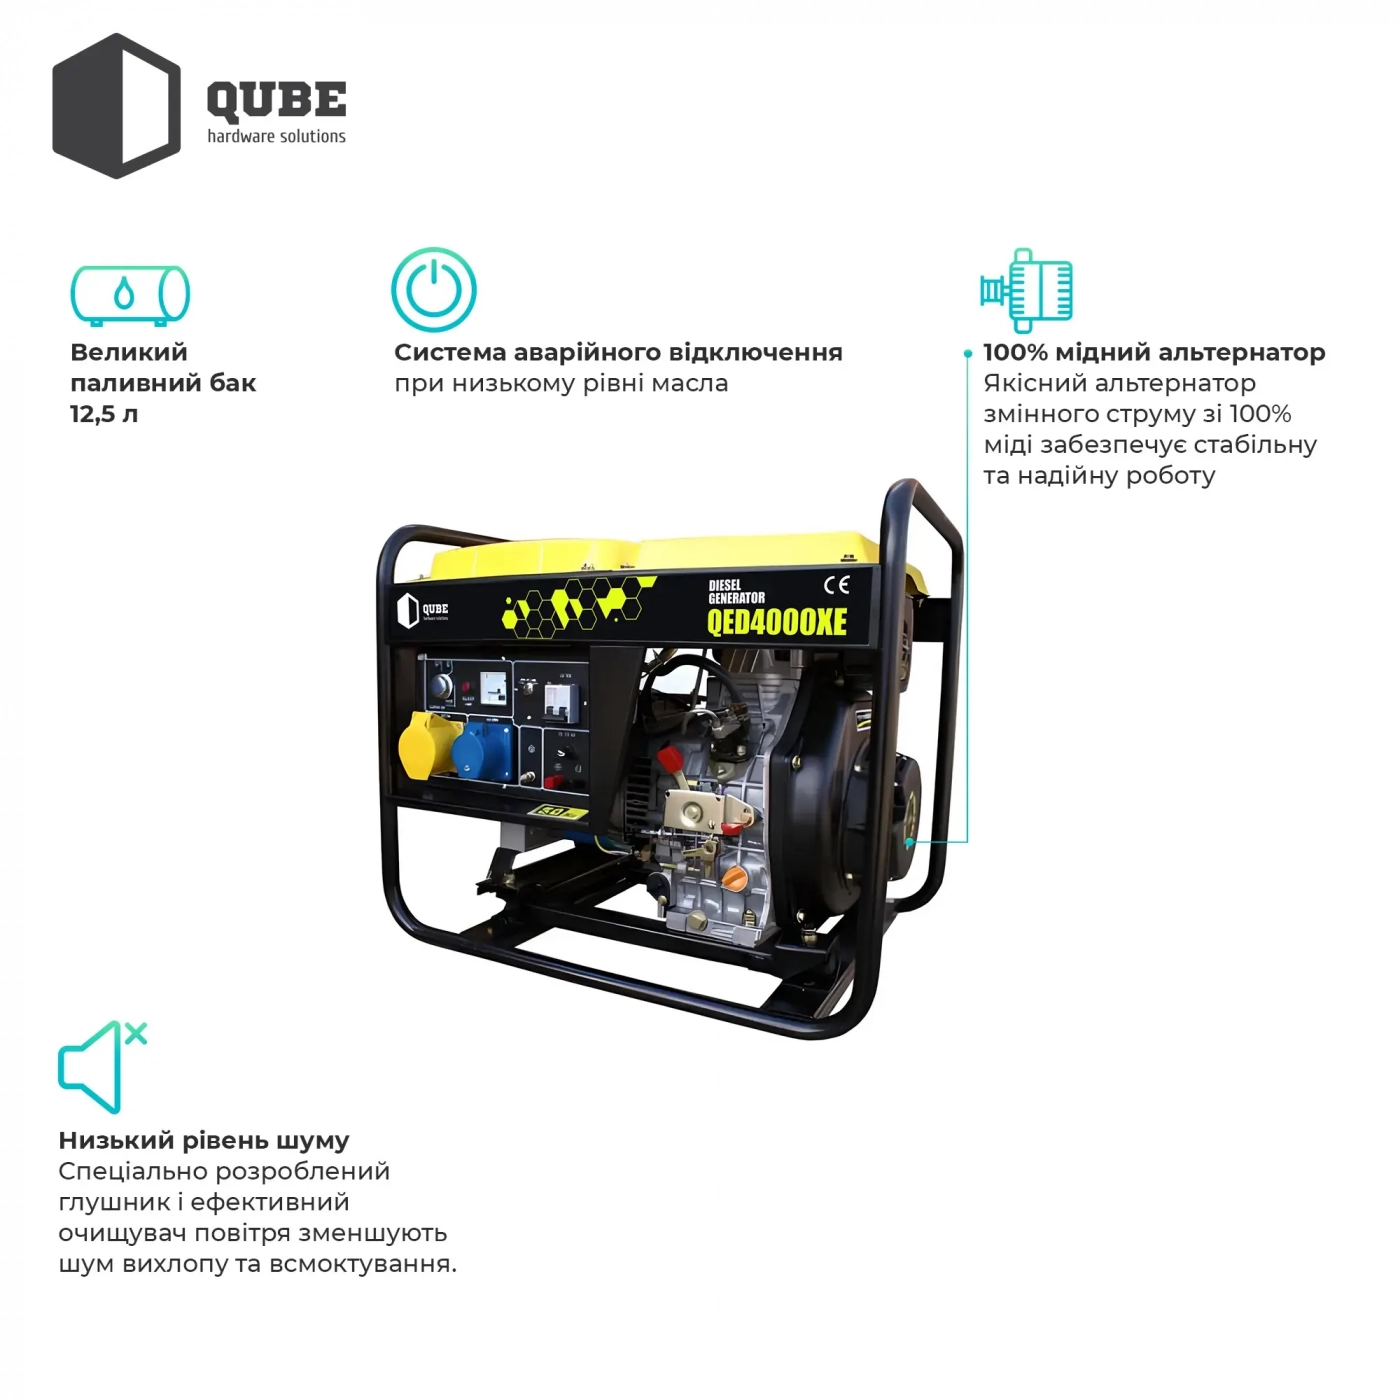 продаём Qube QED4000XE в Украине - фото 4